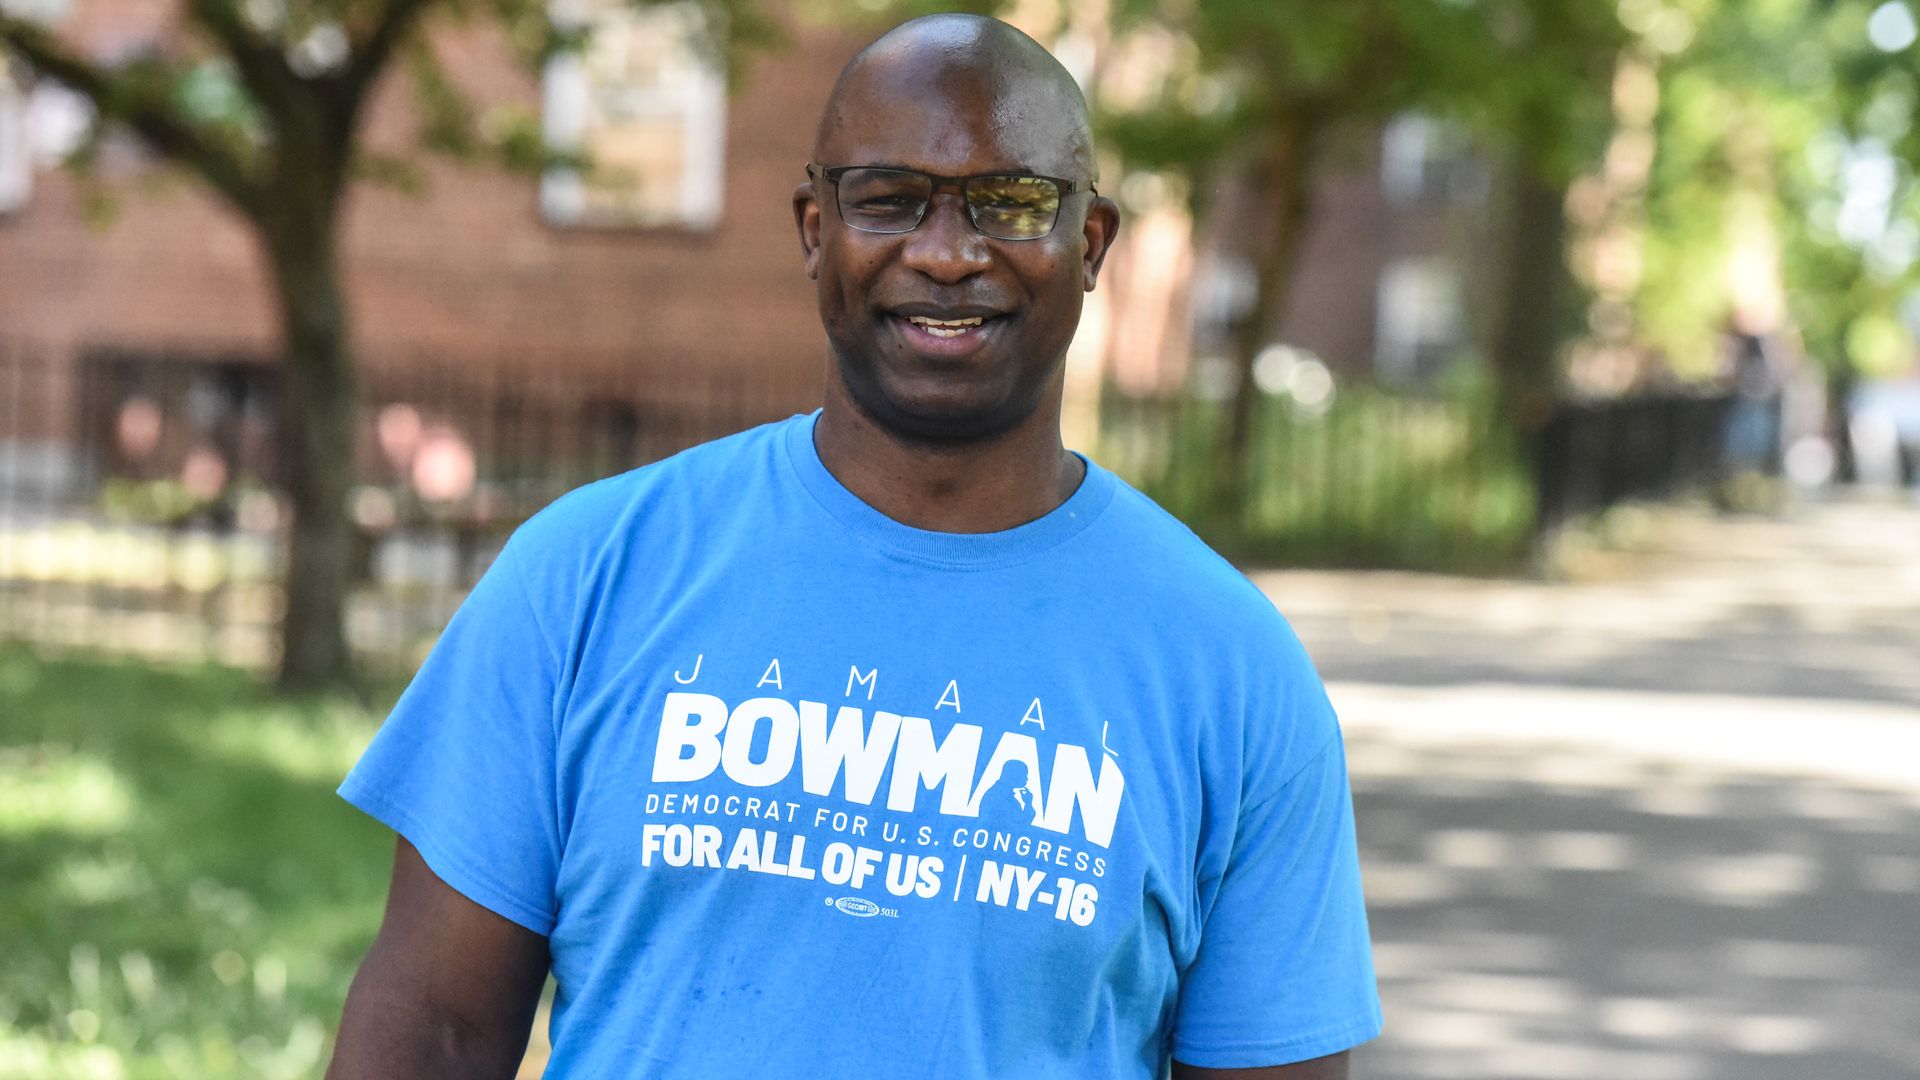 Jamaal Bowman unseats veteran Rep. Eliot Engel in New York primary